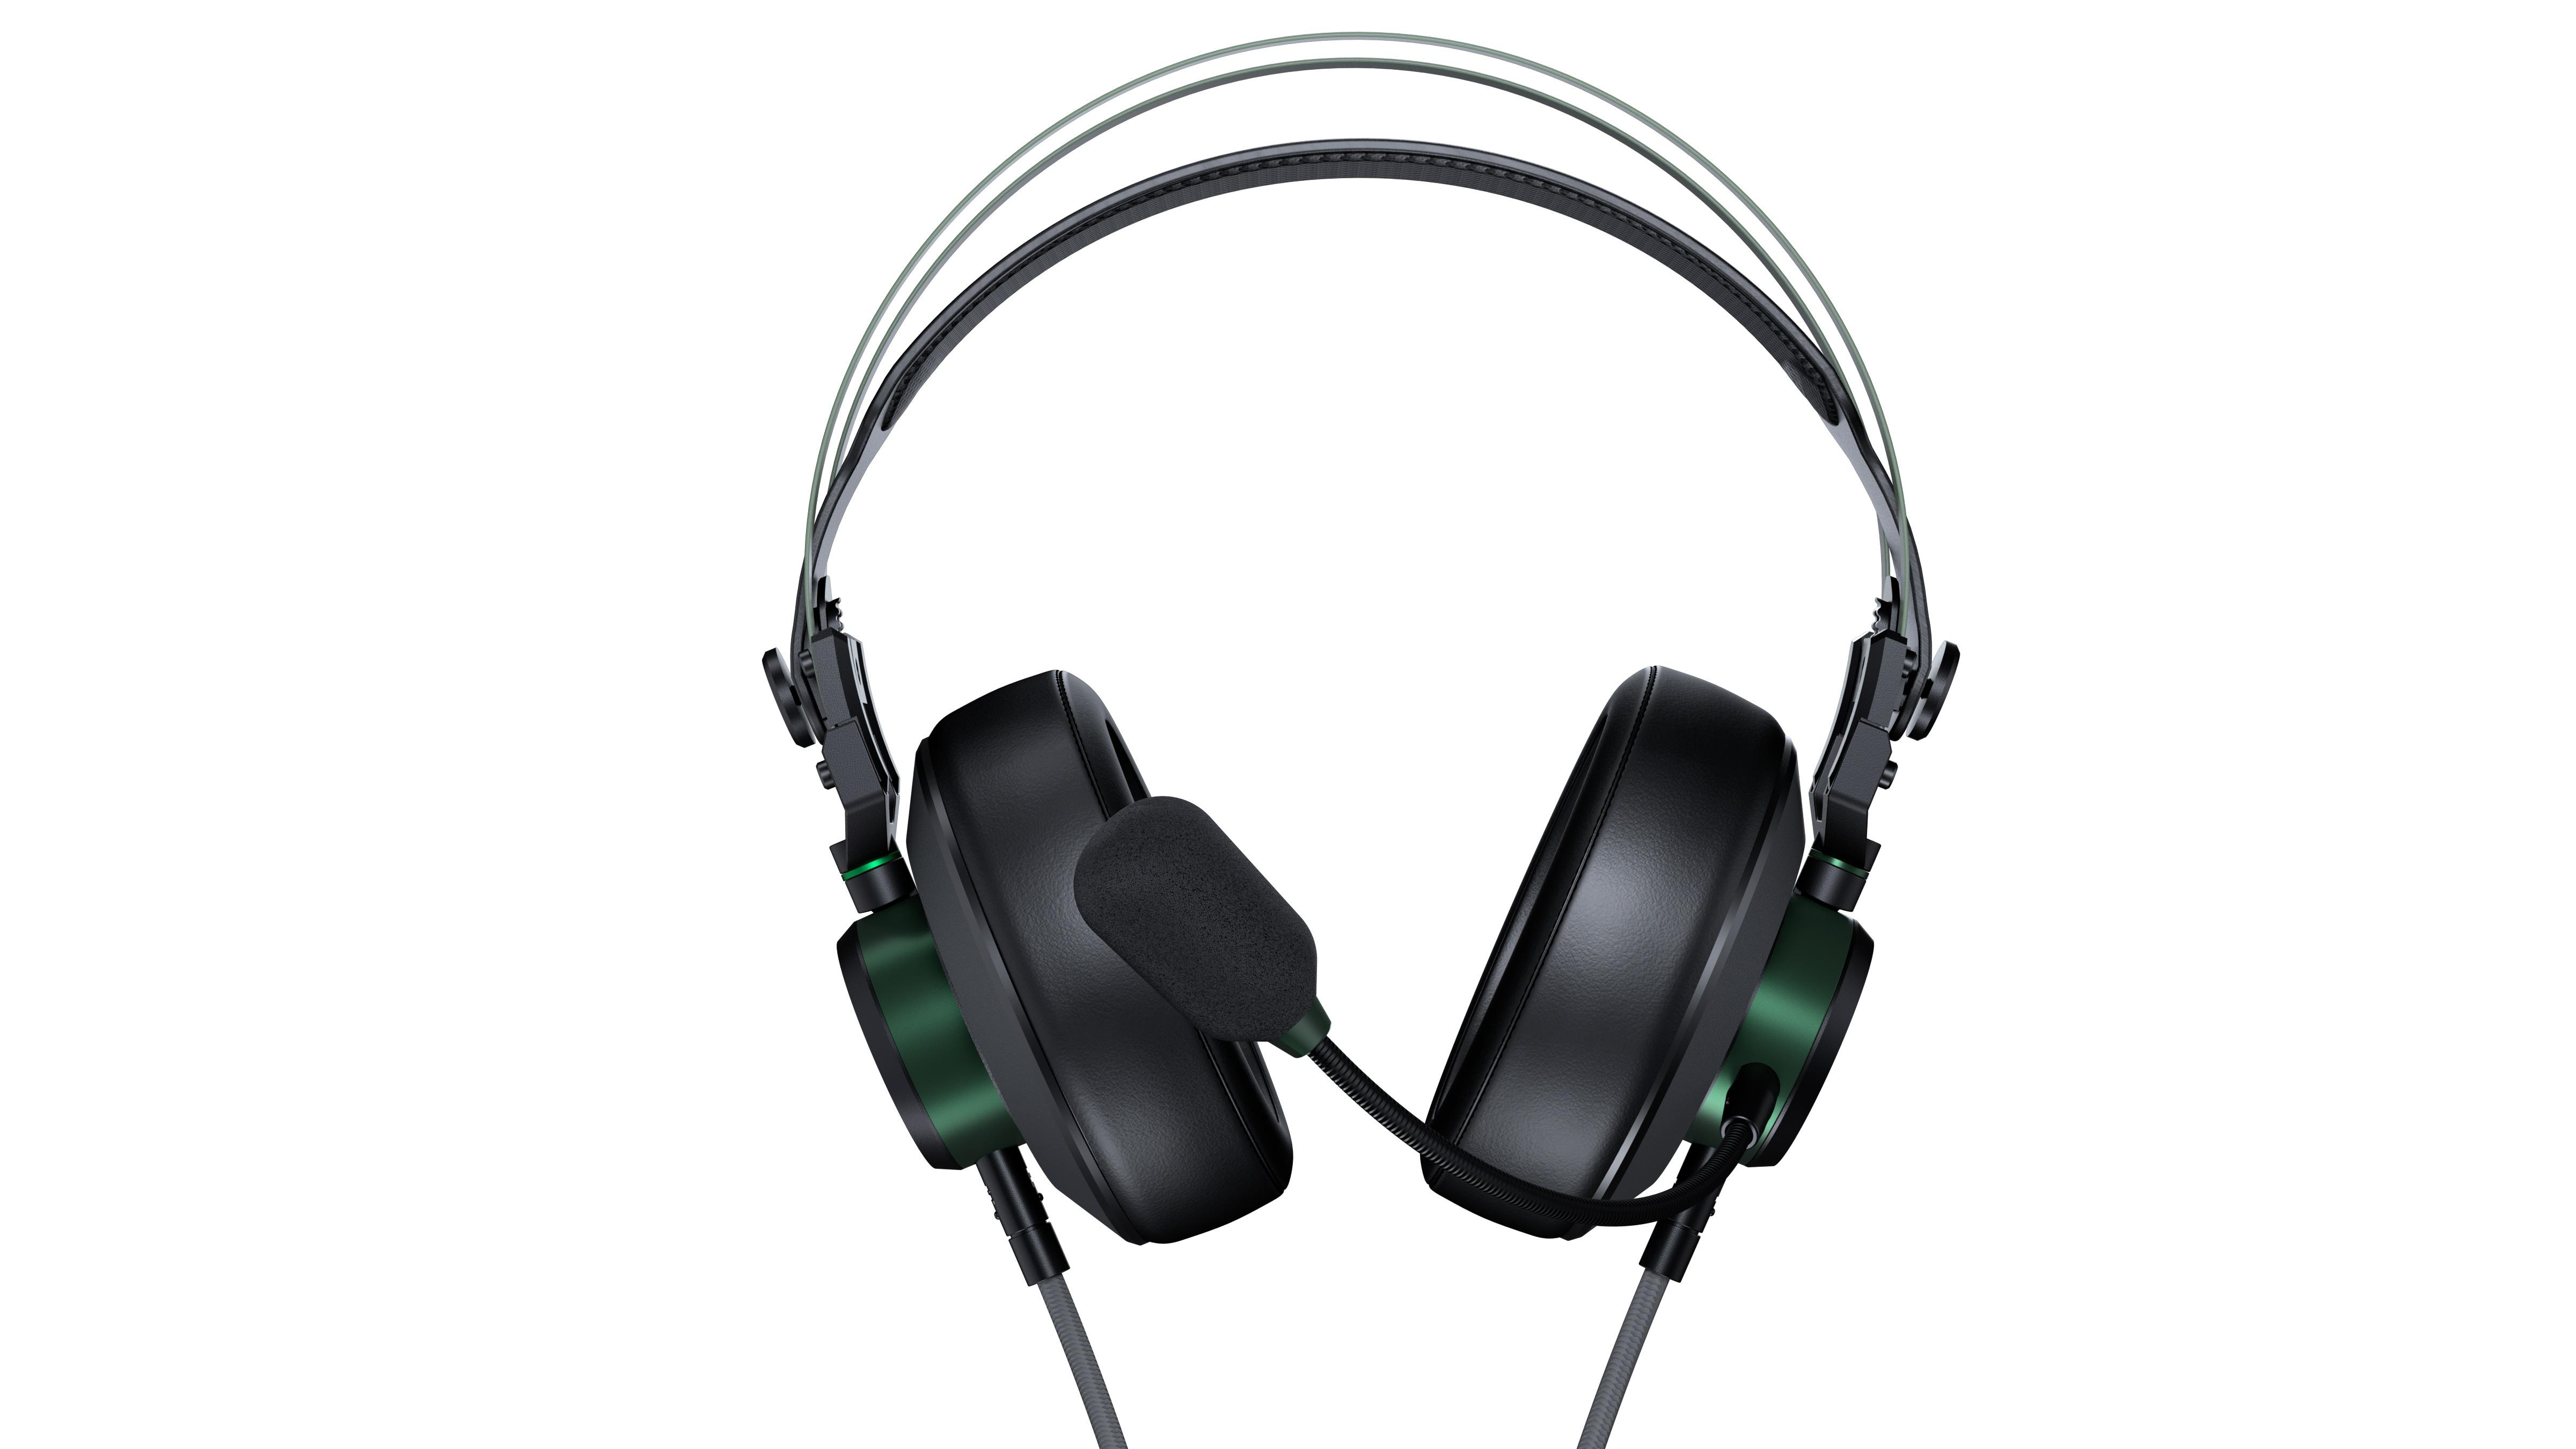 COUGAR VM410 XB, Headset Over-ear Gaming schwarz-grün